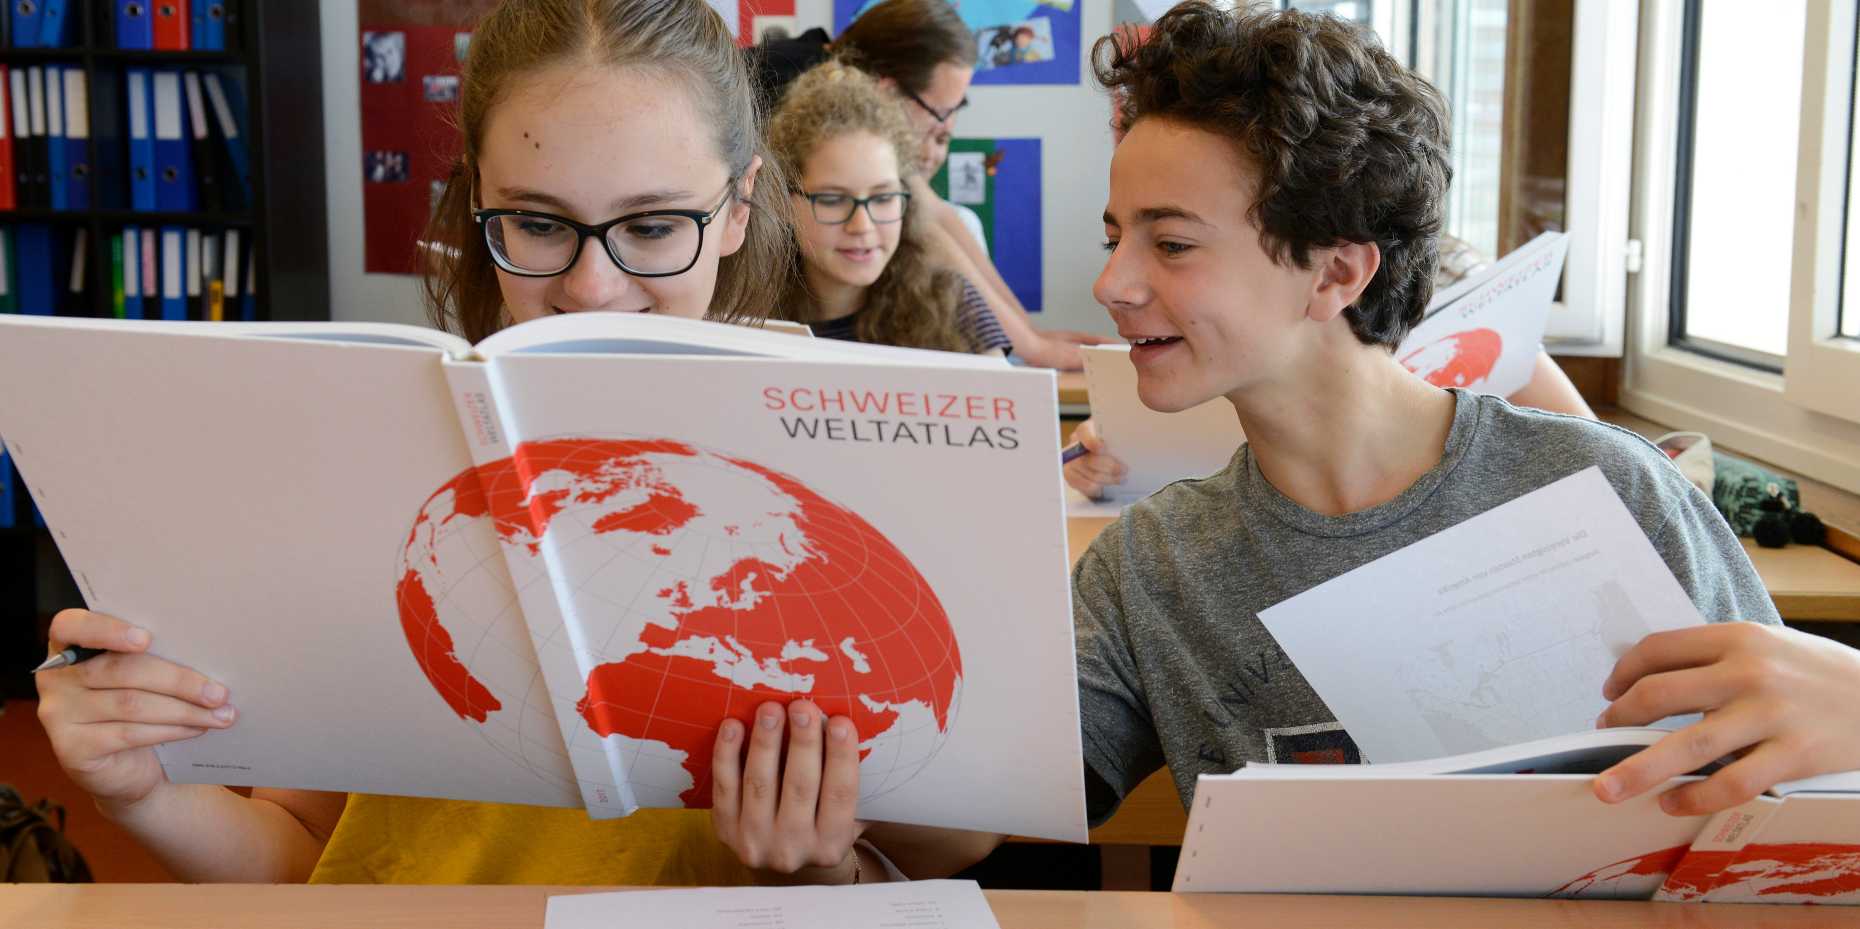 Pupils using the new Swiss World Atlas